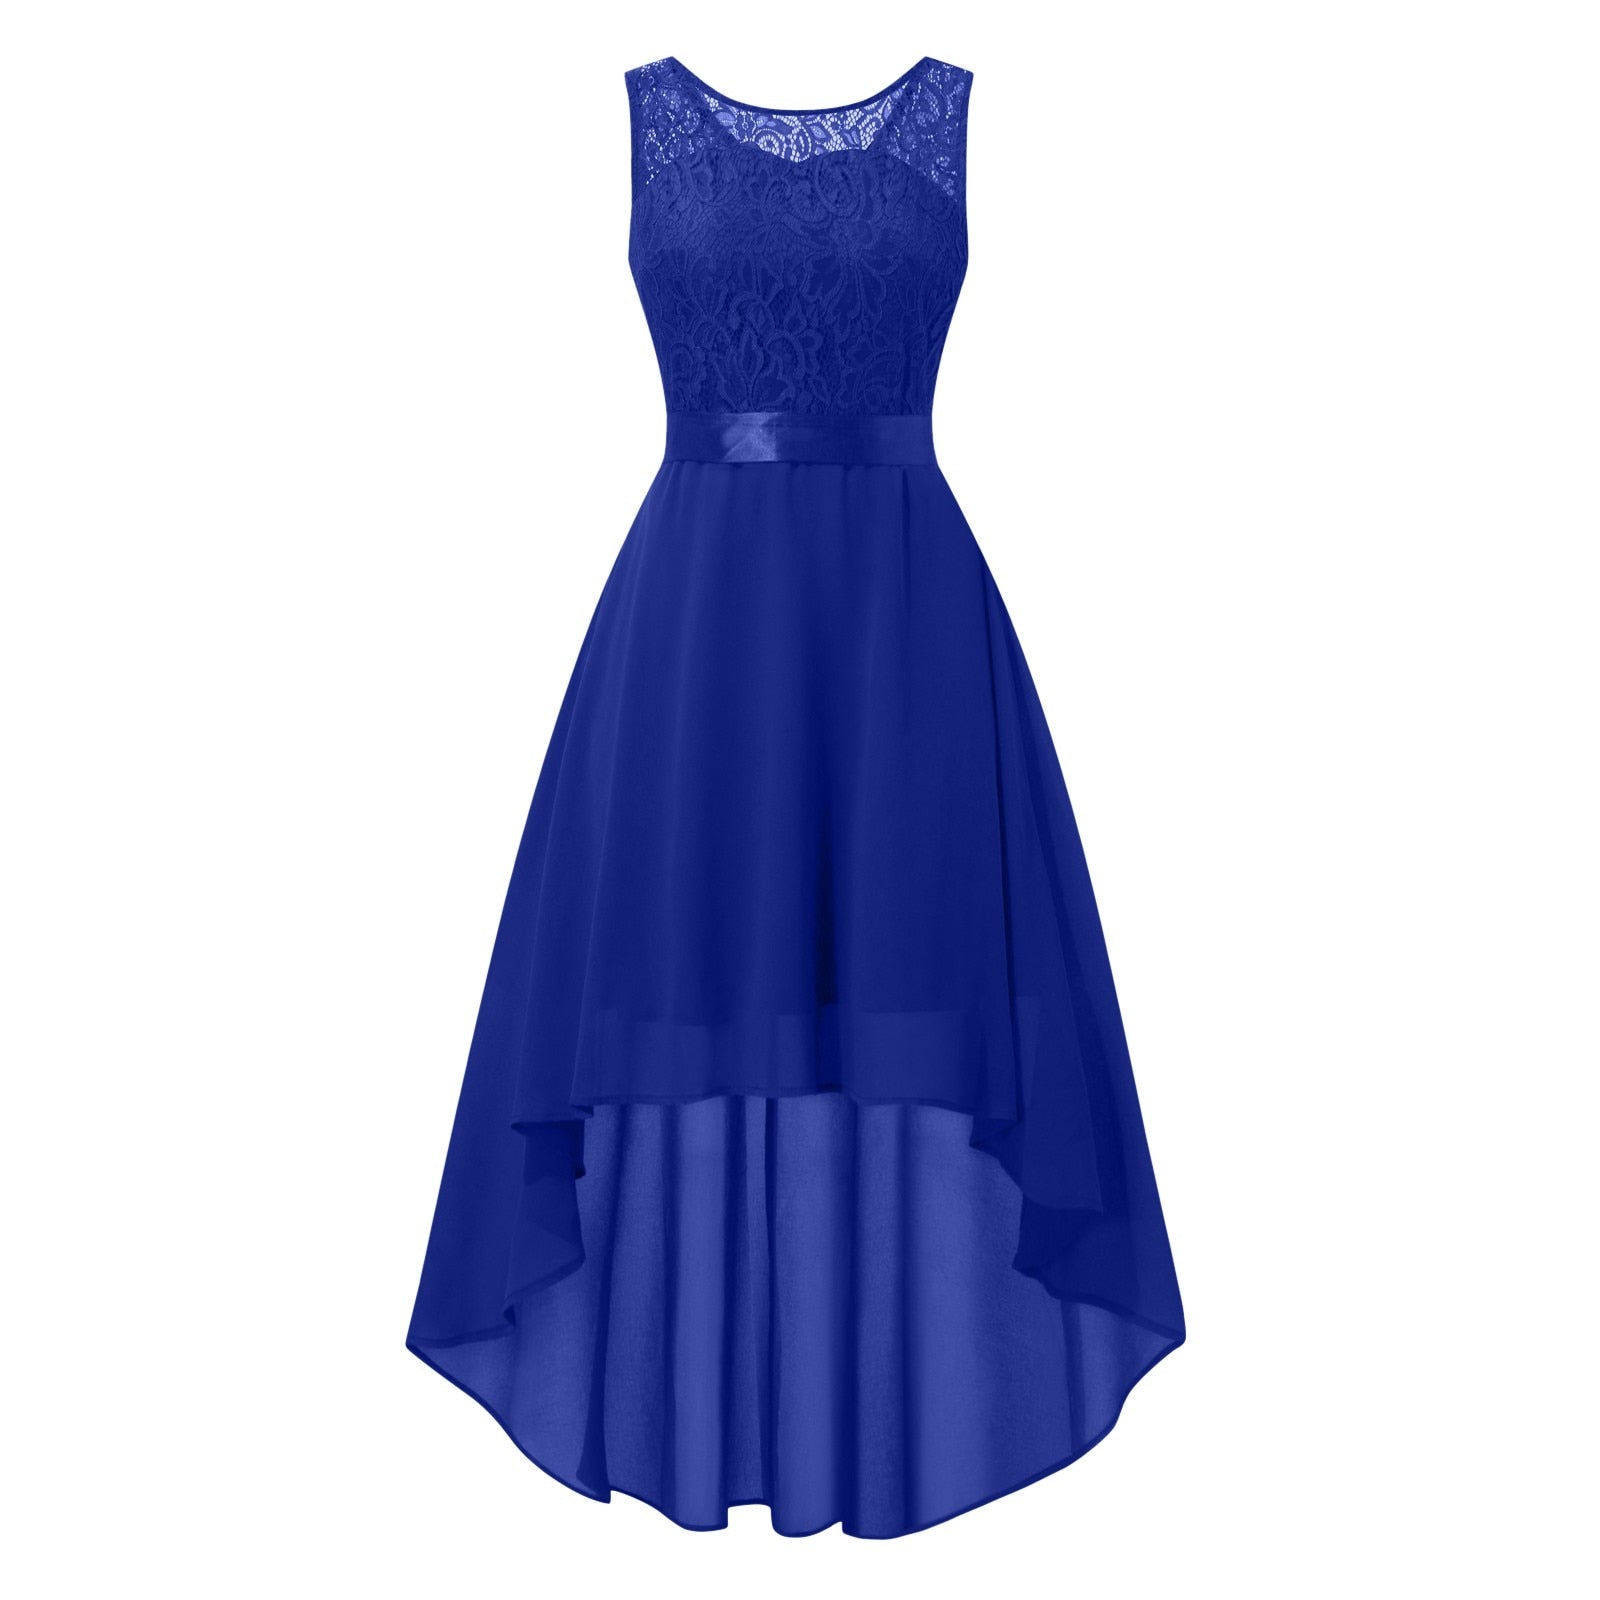 Navey blue high low dresses 